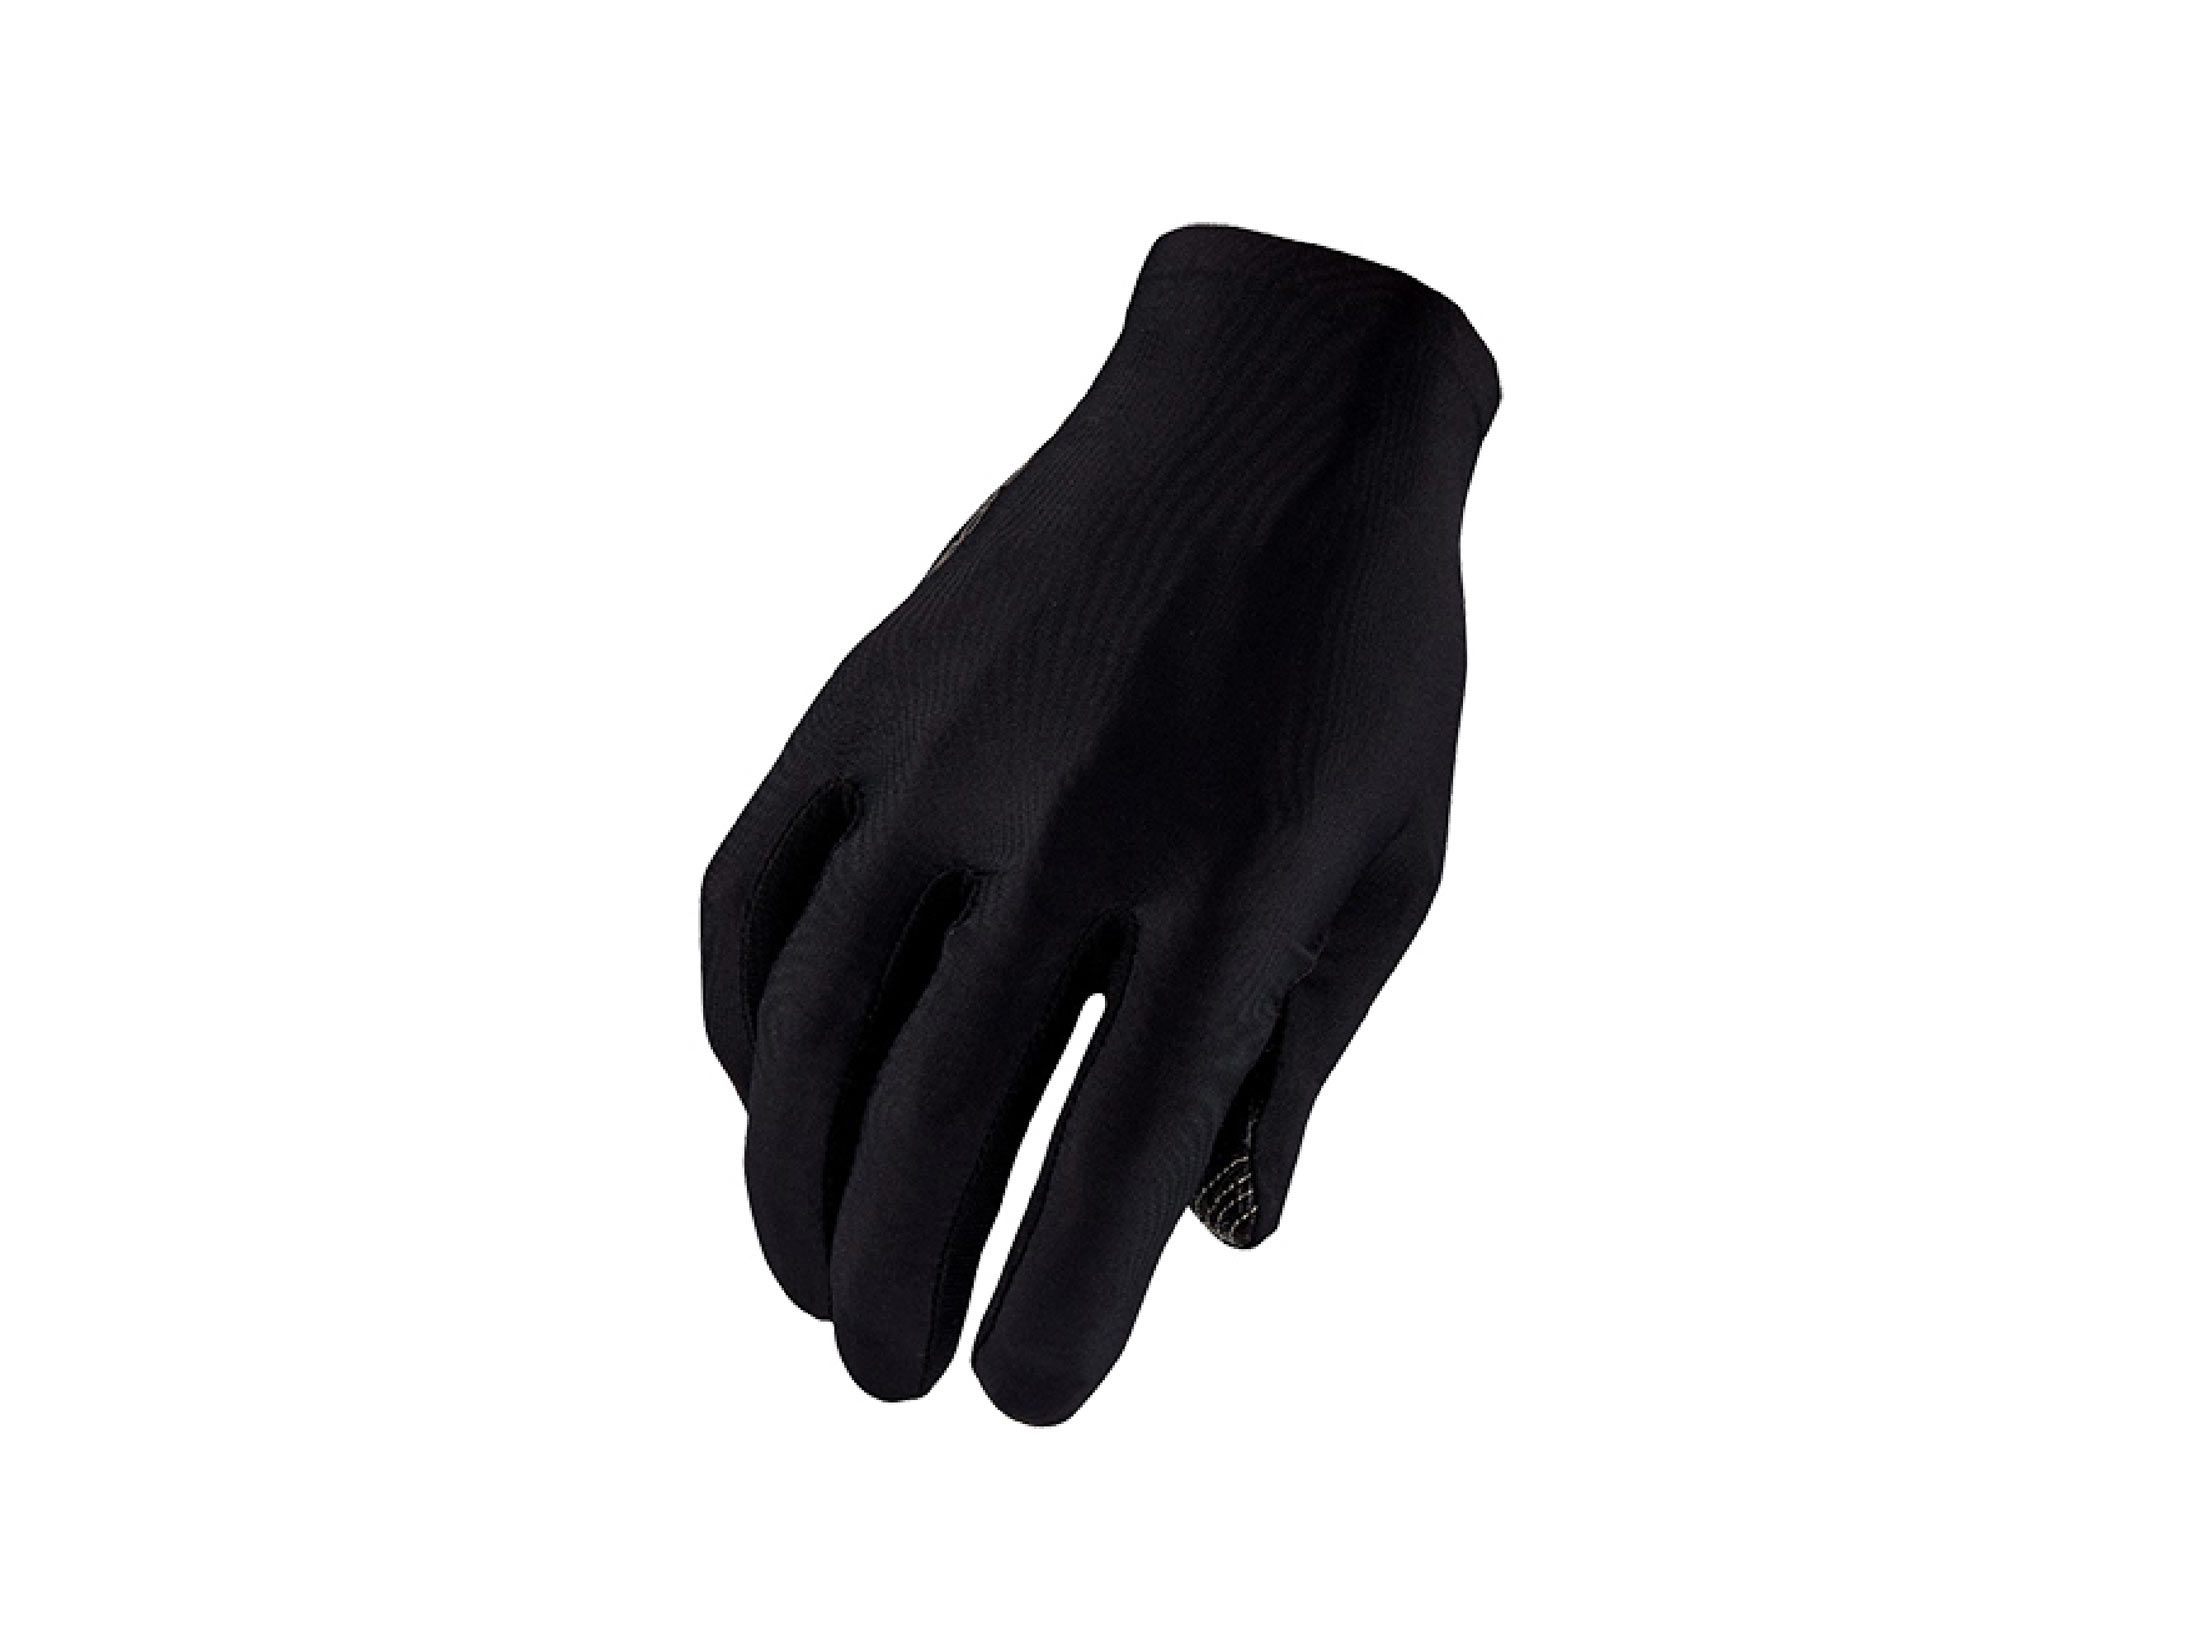 Supacaz SupaG Long Gloves - Blackout (XL)